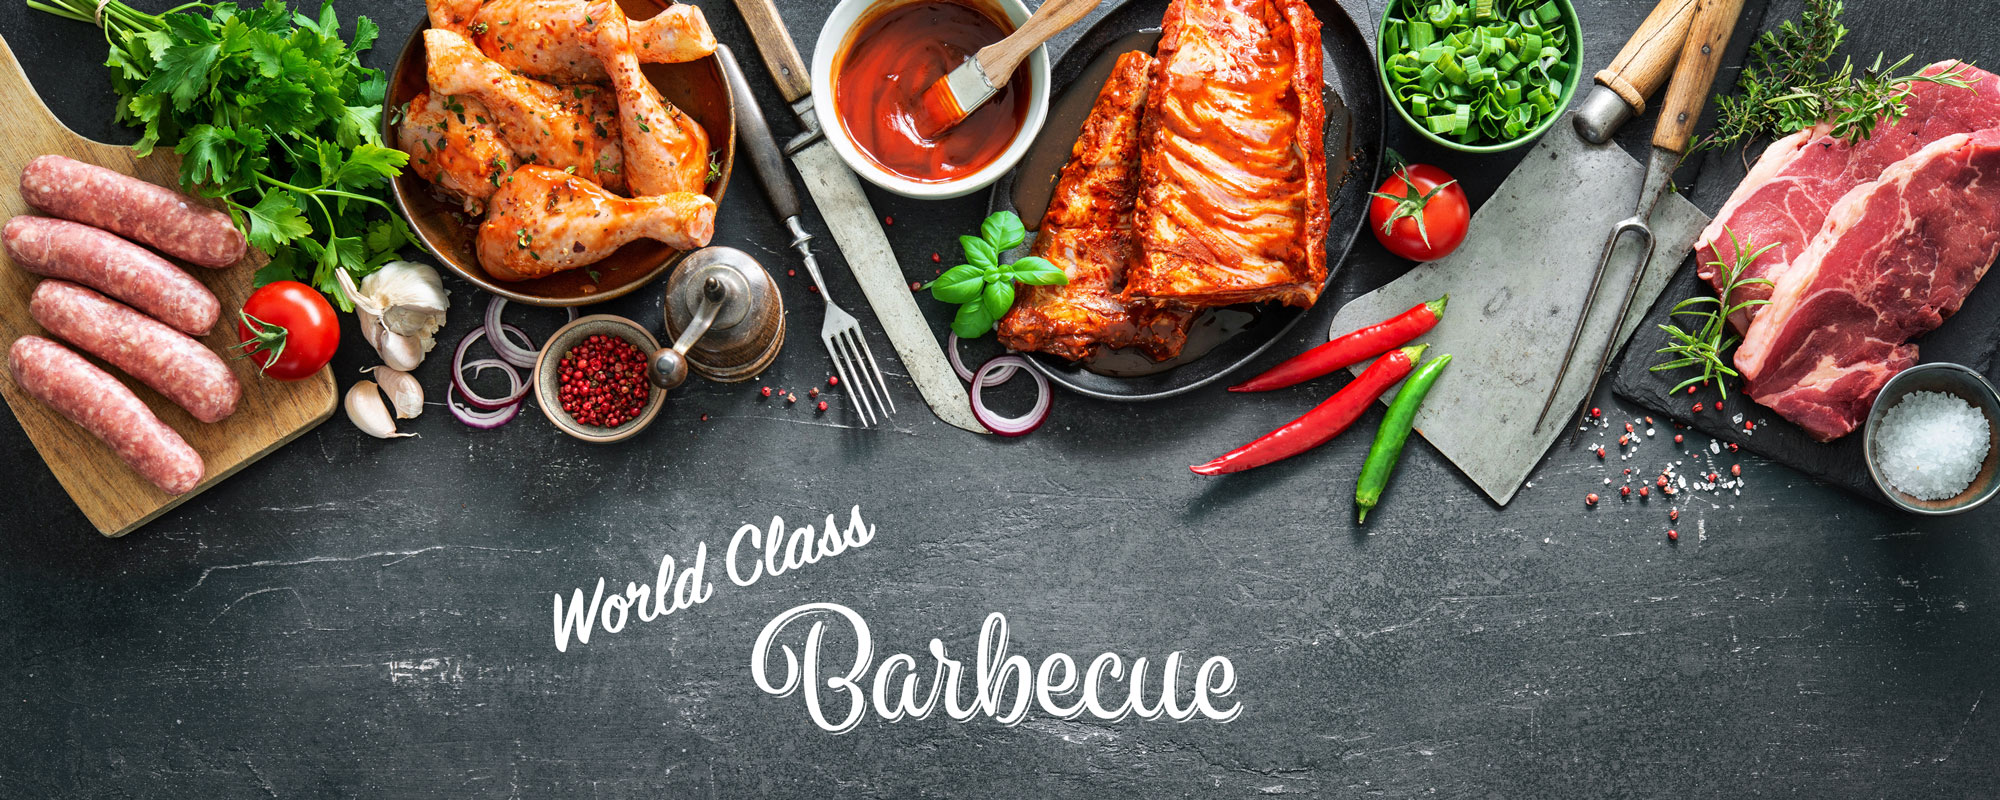 World Class Barbecue